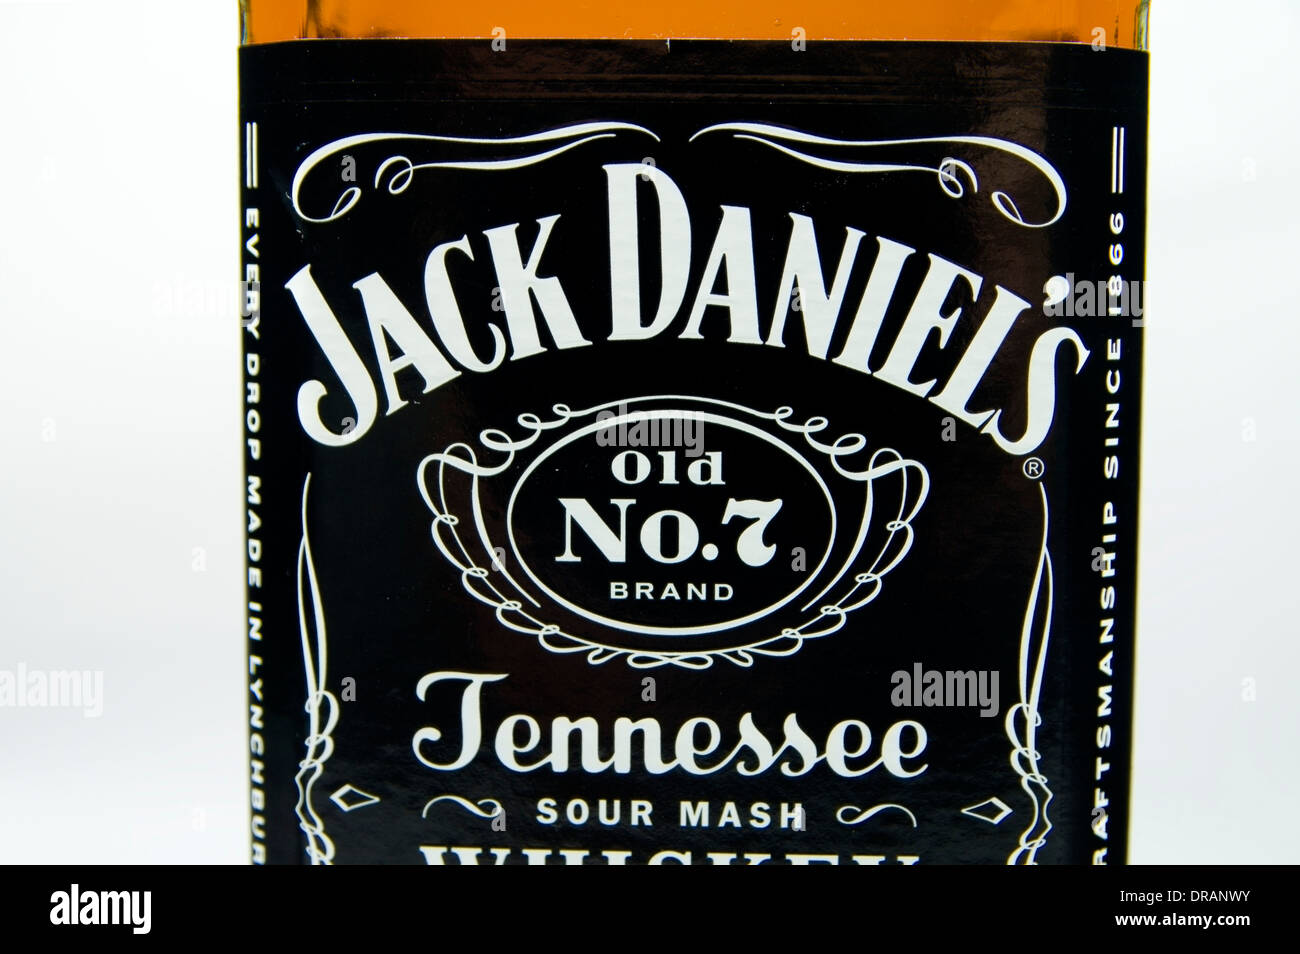 Jack Daniels Whiskey bottle. Stock Photo